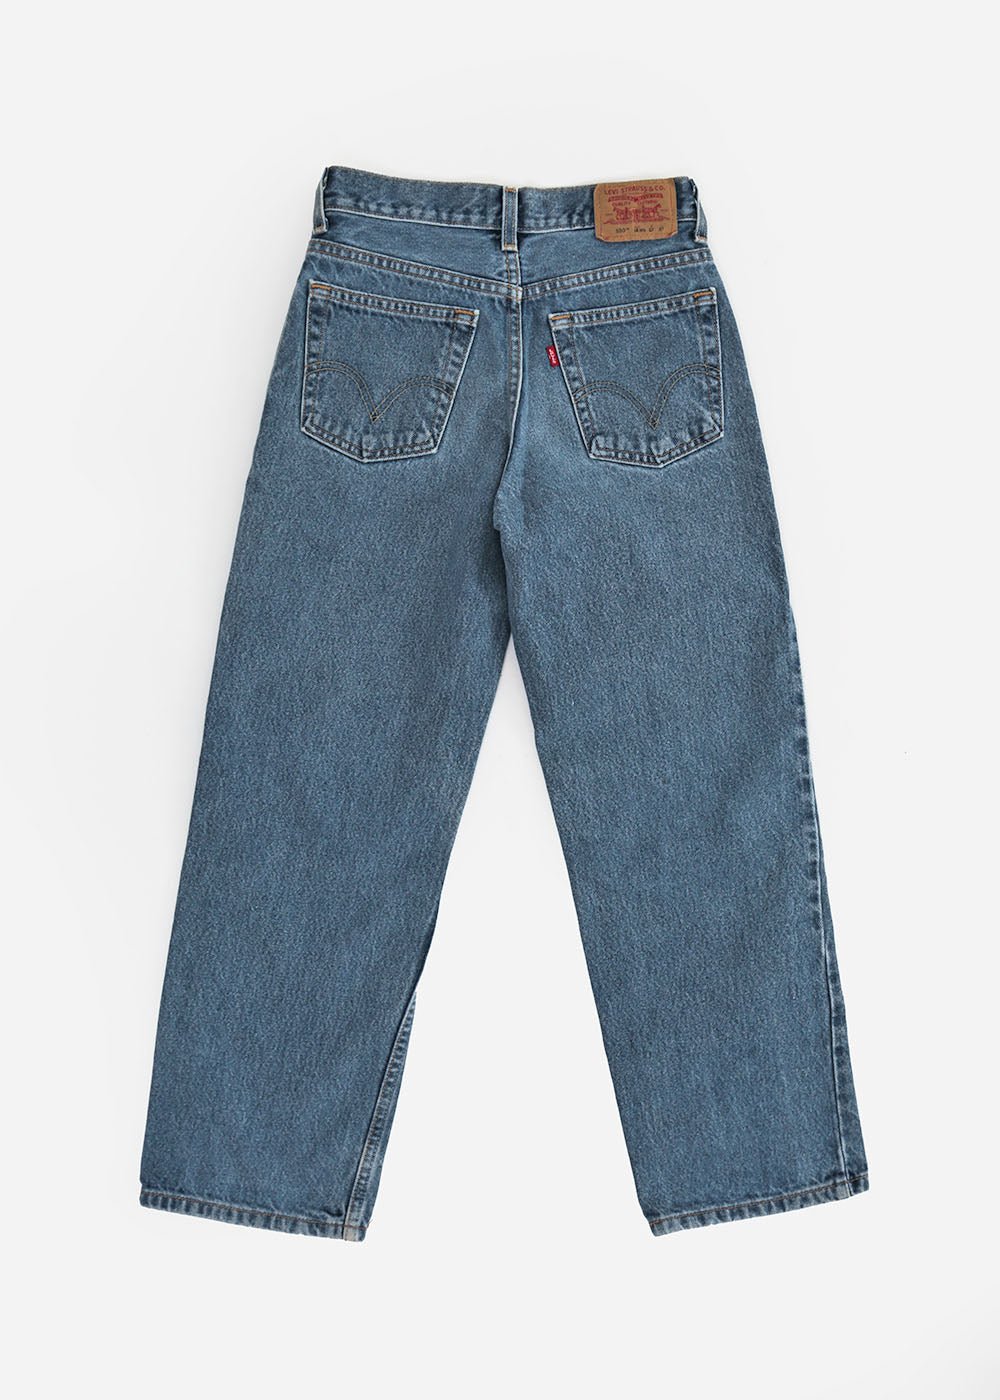 Vintage Levi's 550 Jeans by DENIM REFINERY – New Classics Studios